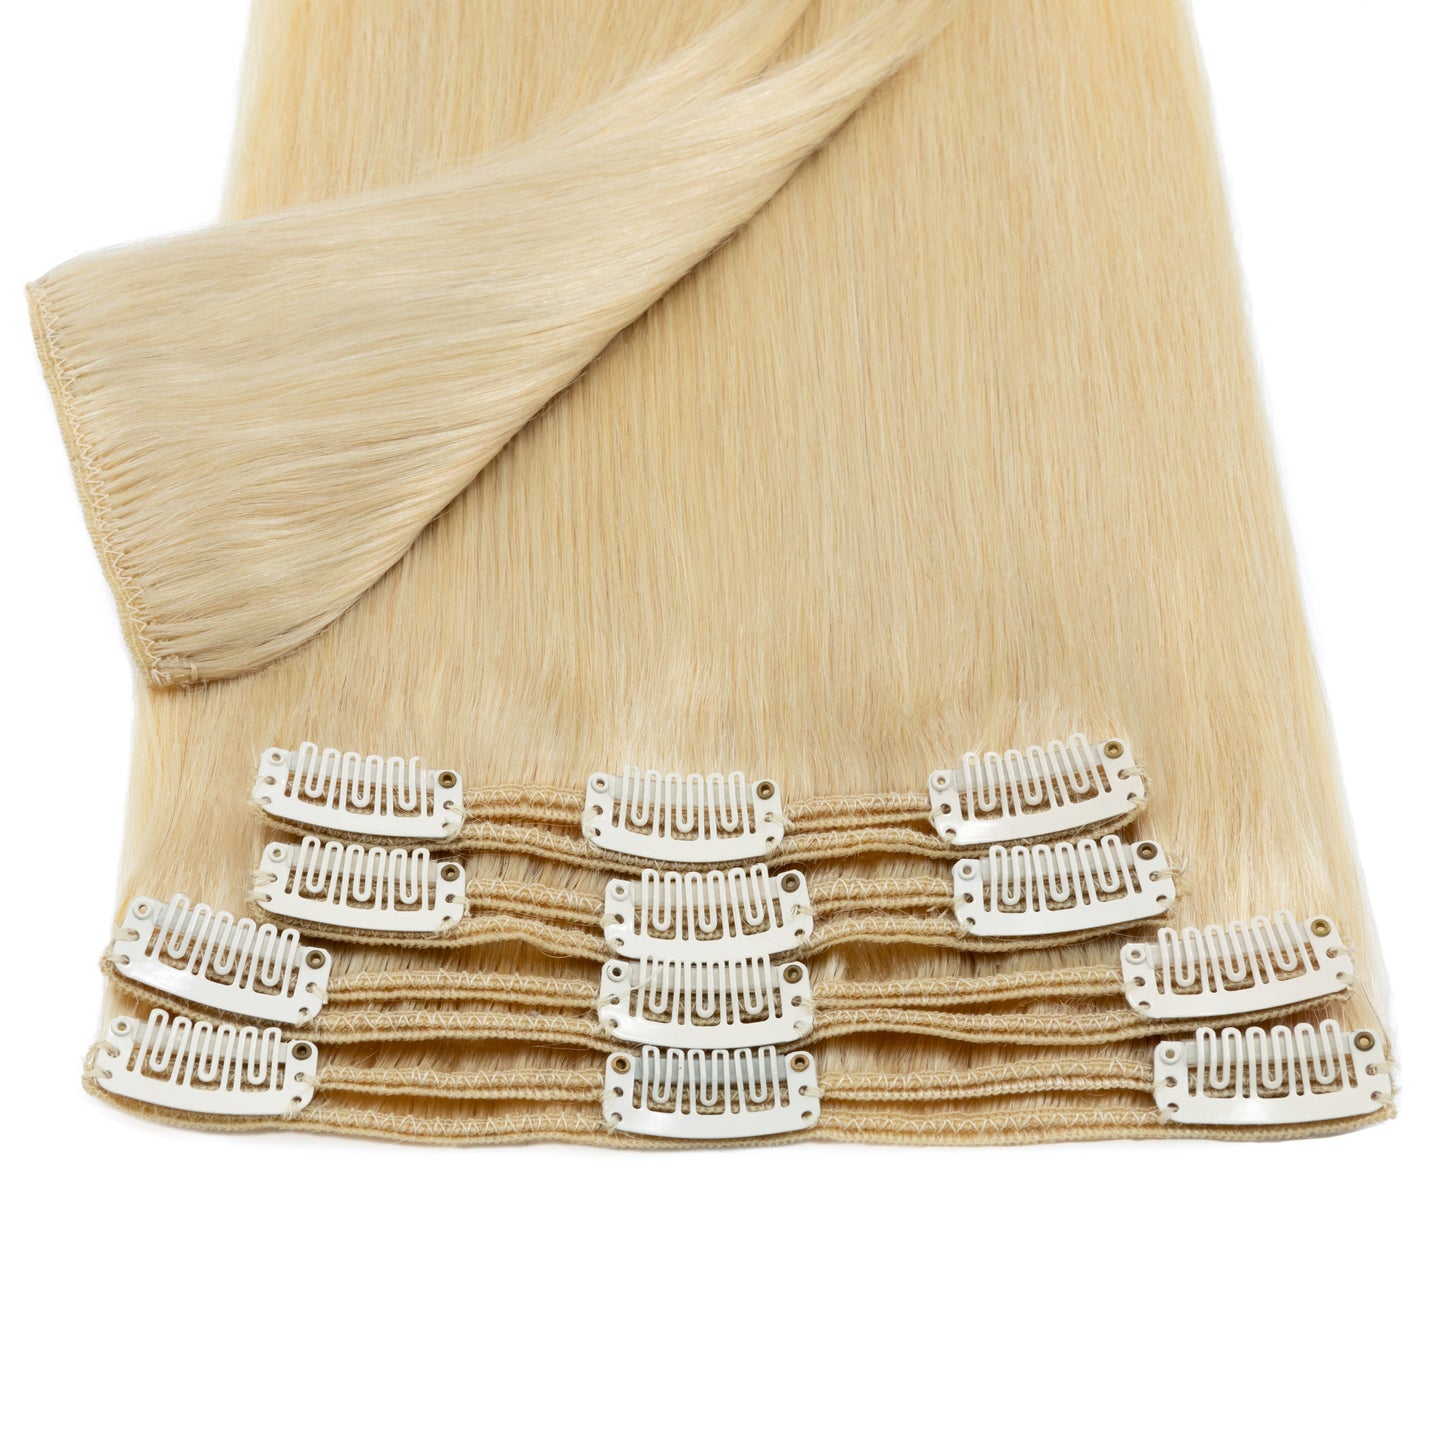 SEGOHAIR 8pcs Clip In Hair Extensions Real Human Hair Platinum Blonde segohair.com